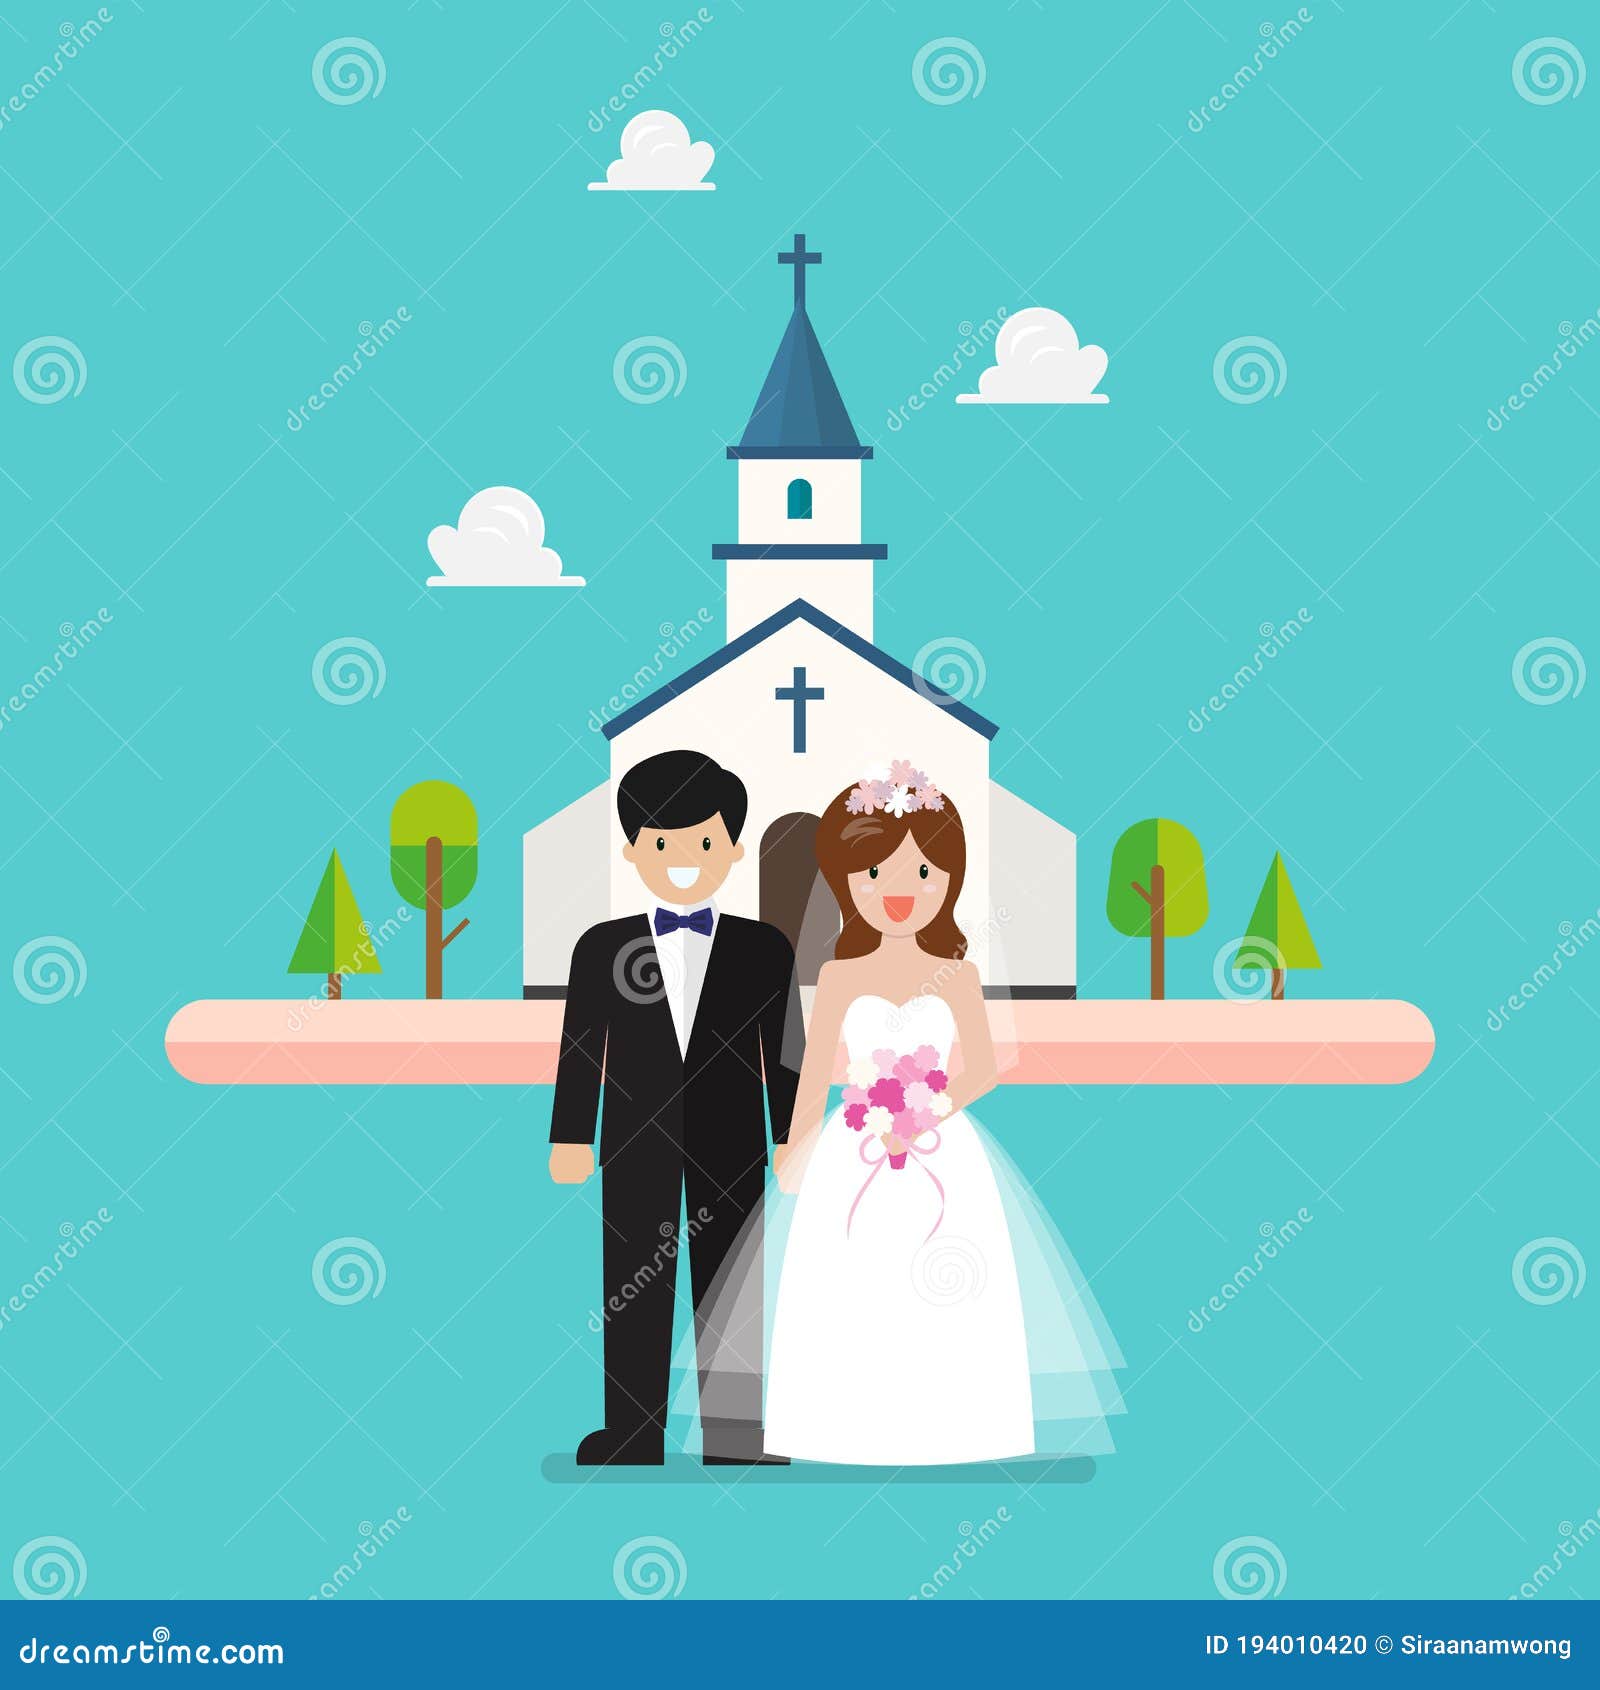 Download free vector wedding cartoon couple Cartoon Wedding